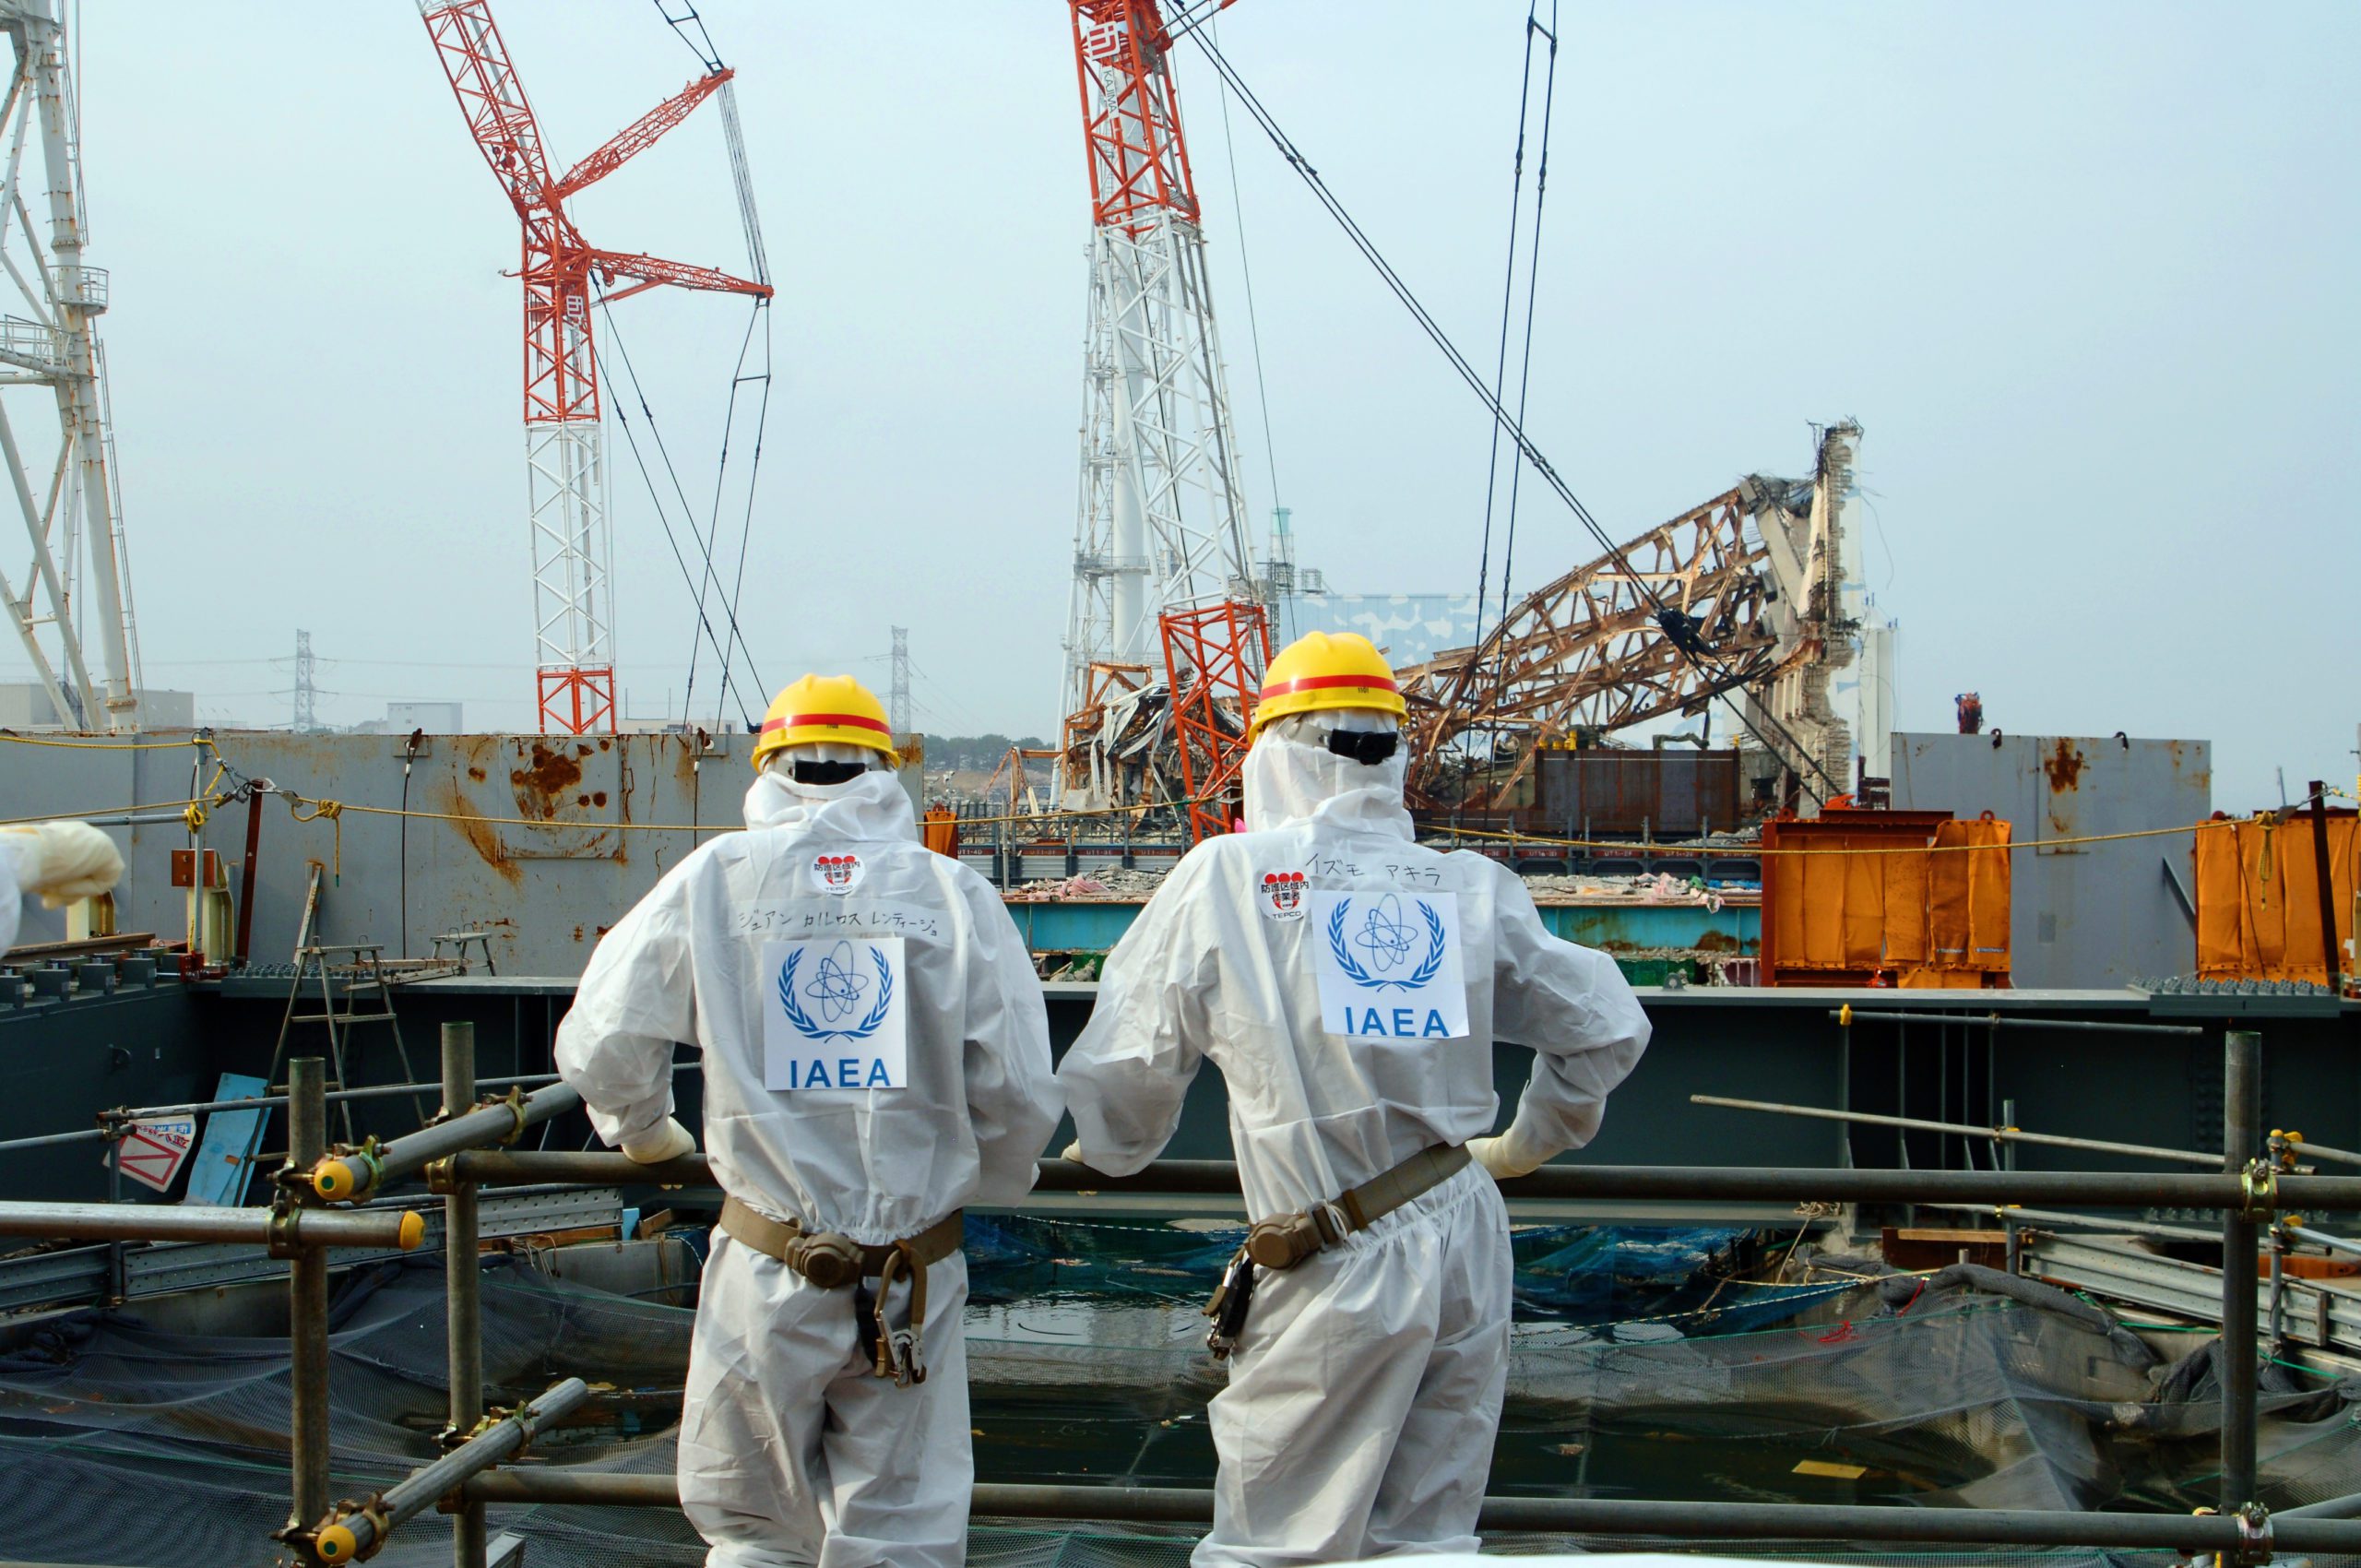 Unit 4 of TEPCO's Fukushima Daiichi Nuclear Power Station (02813334)